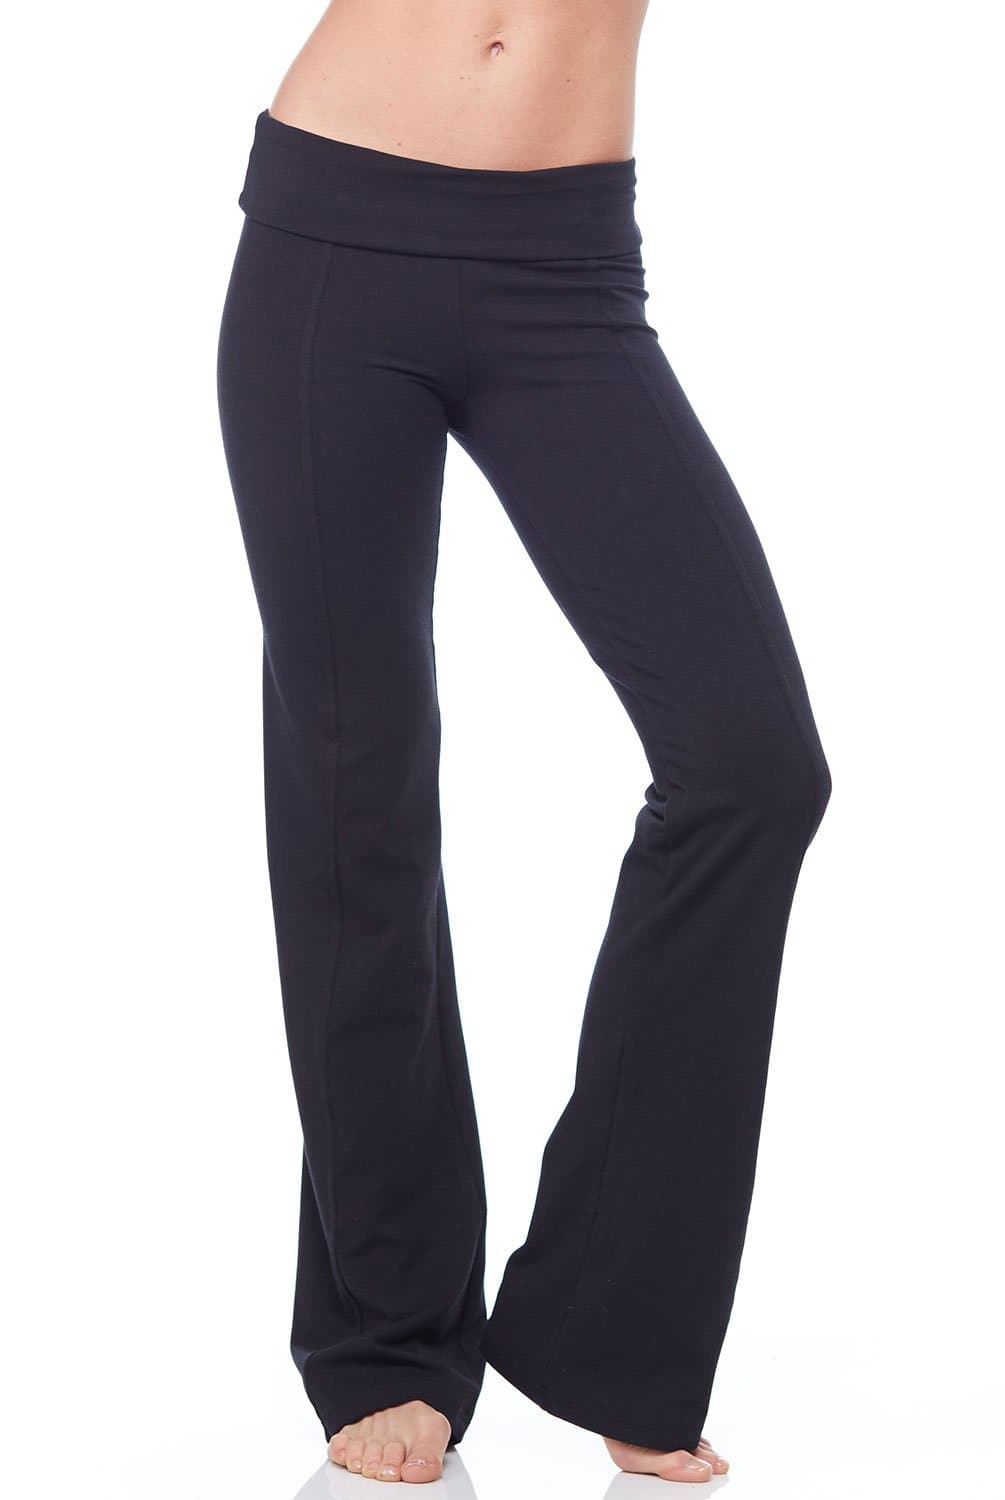 Sandra McCray Flat Foldover Seam Pant - Evolve Fit Wear